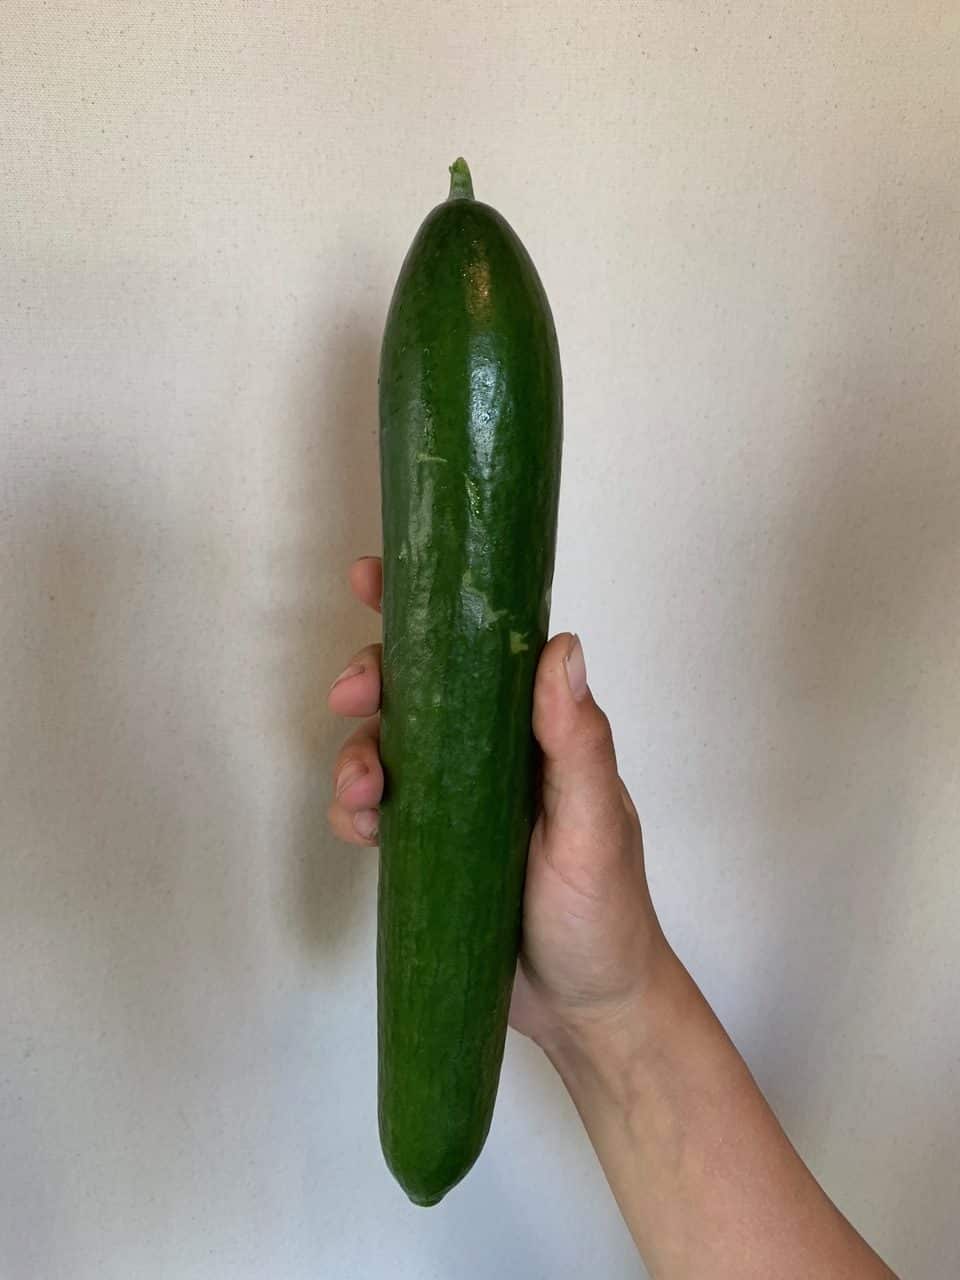 Unagi cucumber, specialty